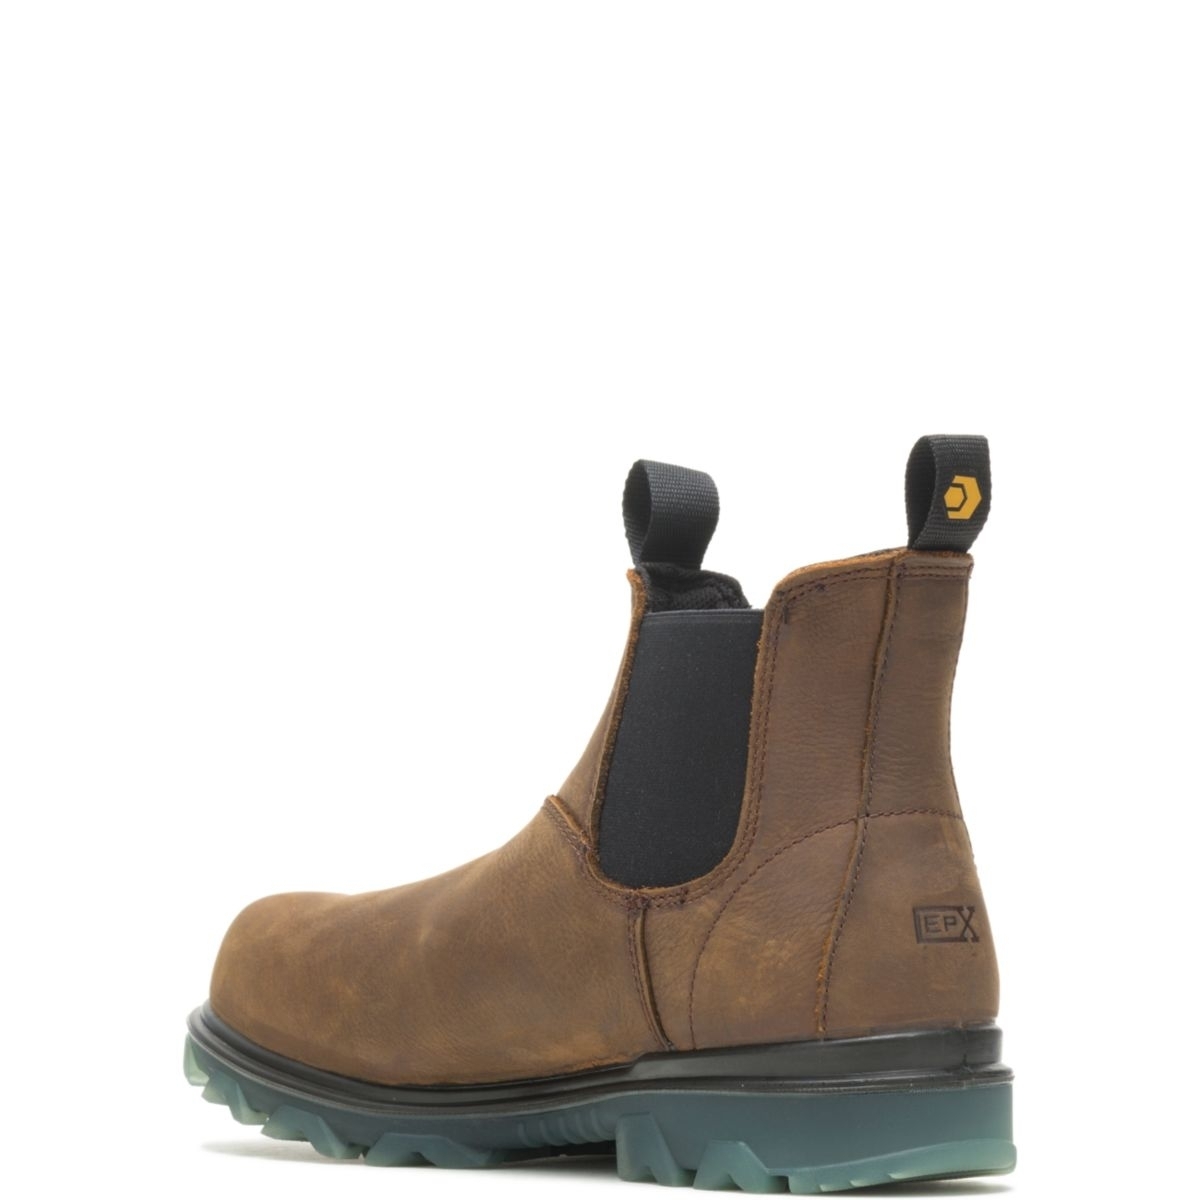 WOLVERINE Men's I-90 EPXÂ® Waterproof Soft Toe Romeo Pull On Work Boot Brown - W10790 - SUDAN BROWN, 8 X-Wide